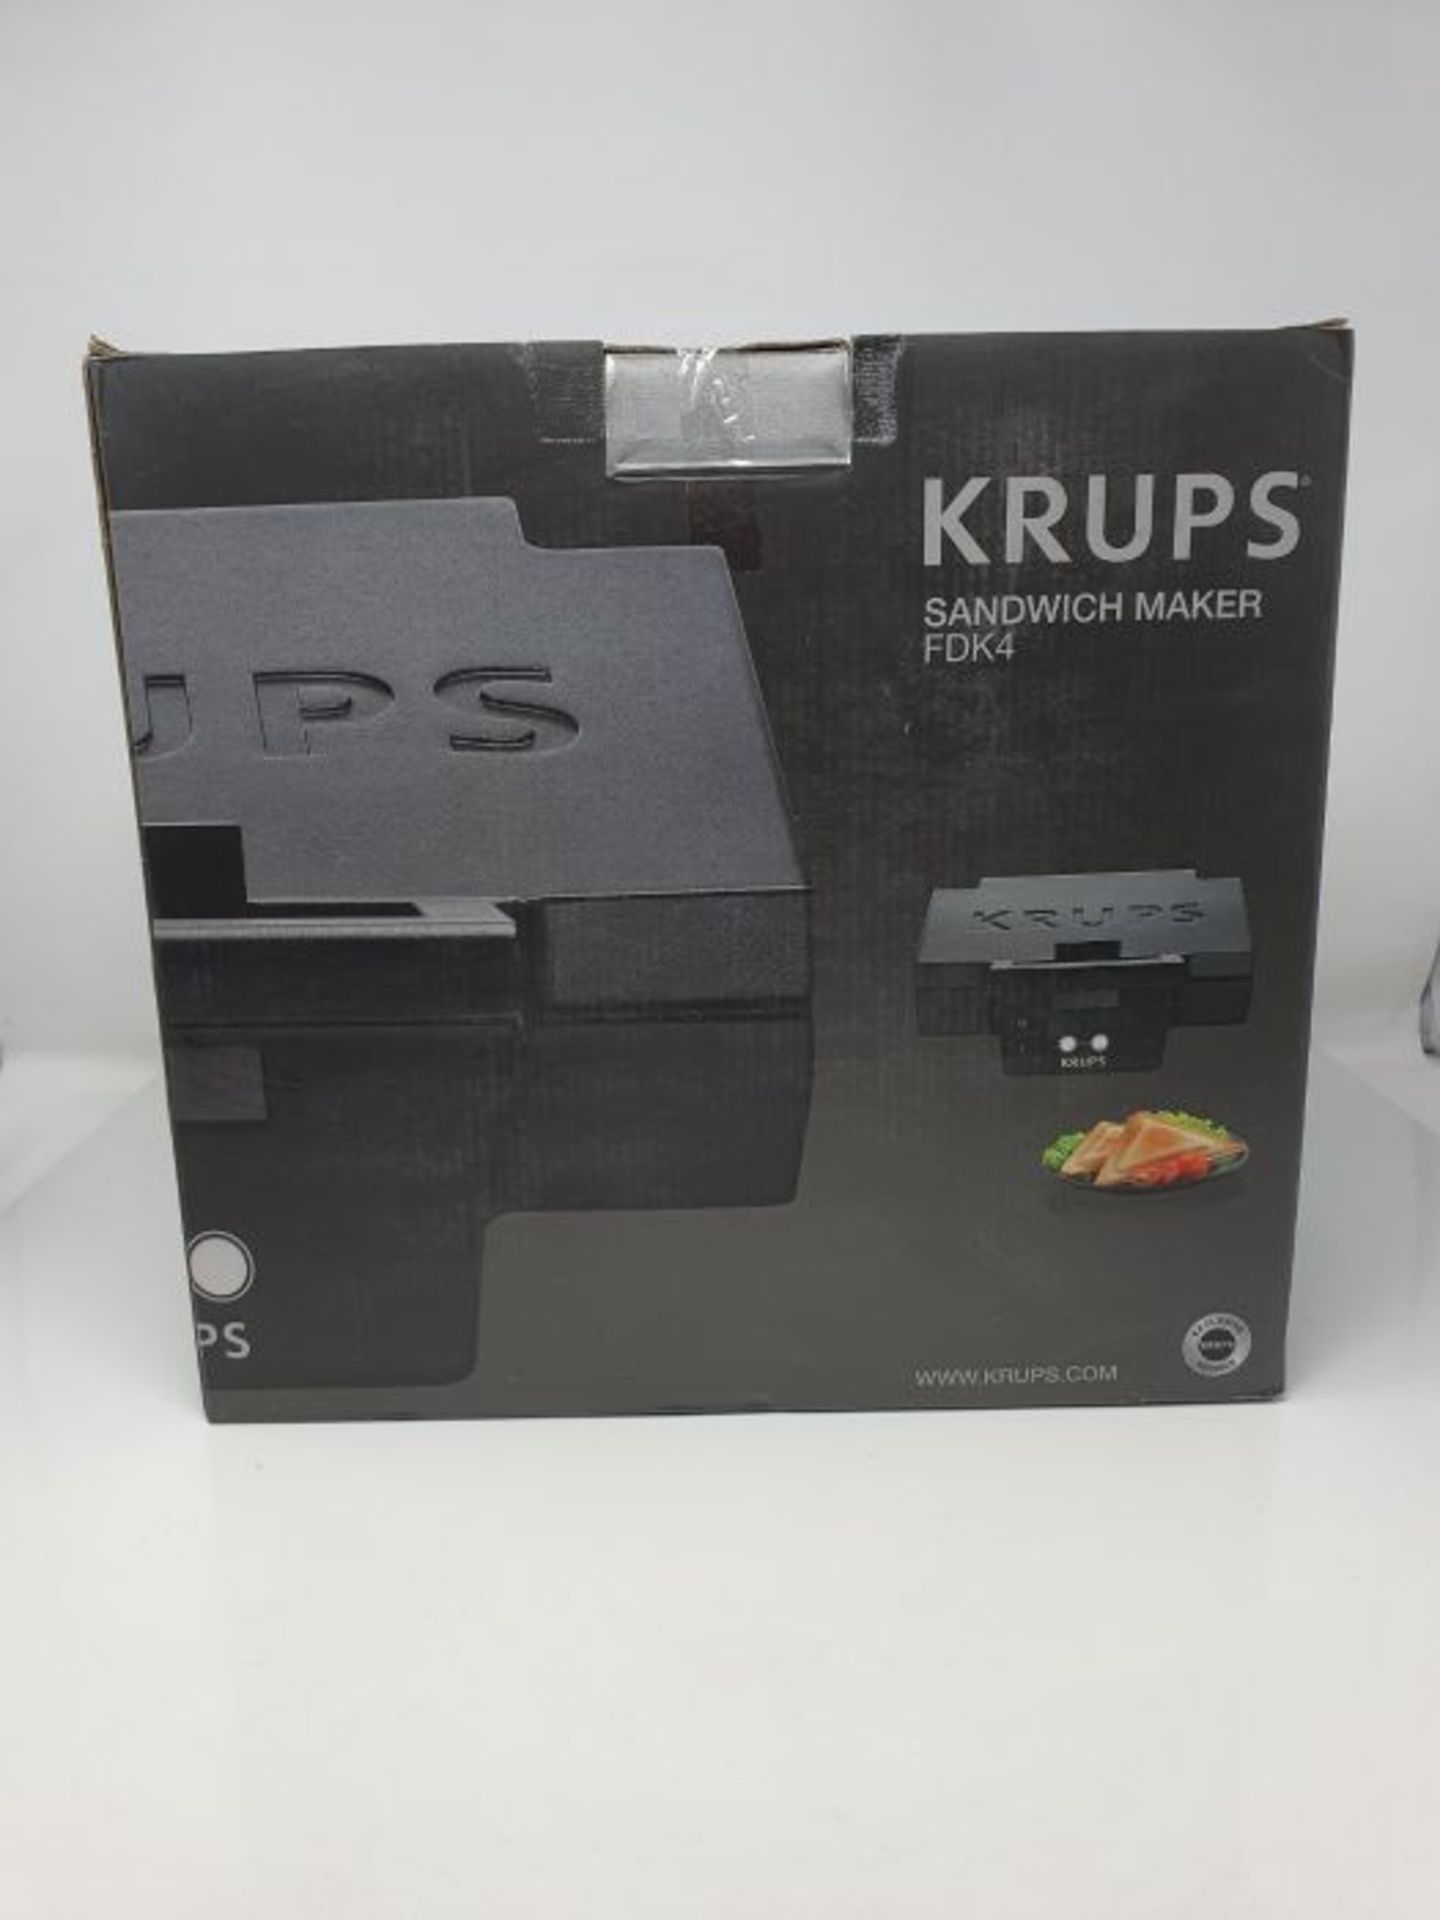 Krups F DK4 51 - sandwich makers (Black) - Image 2 of 3